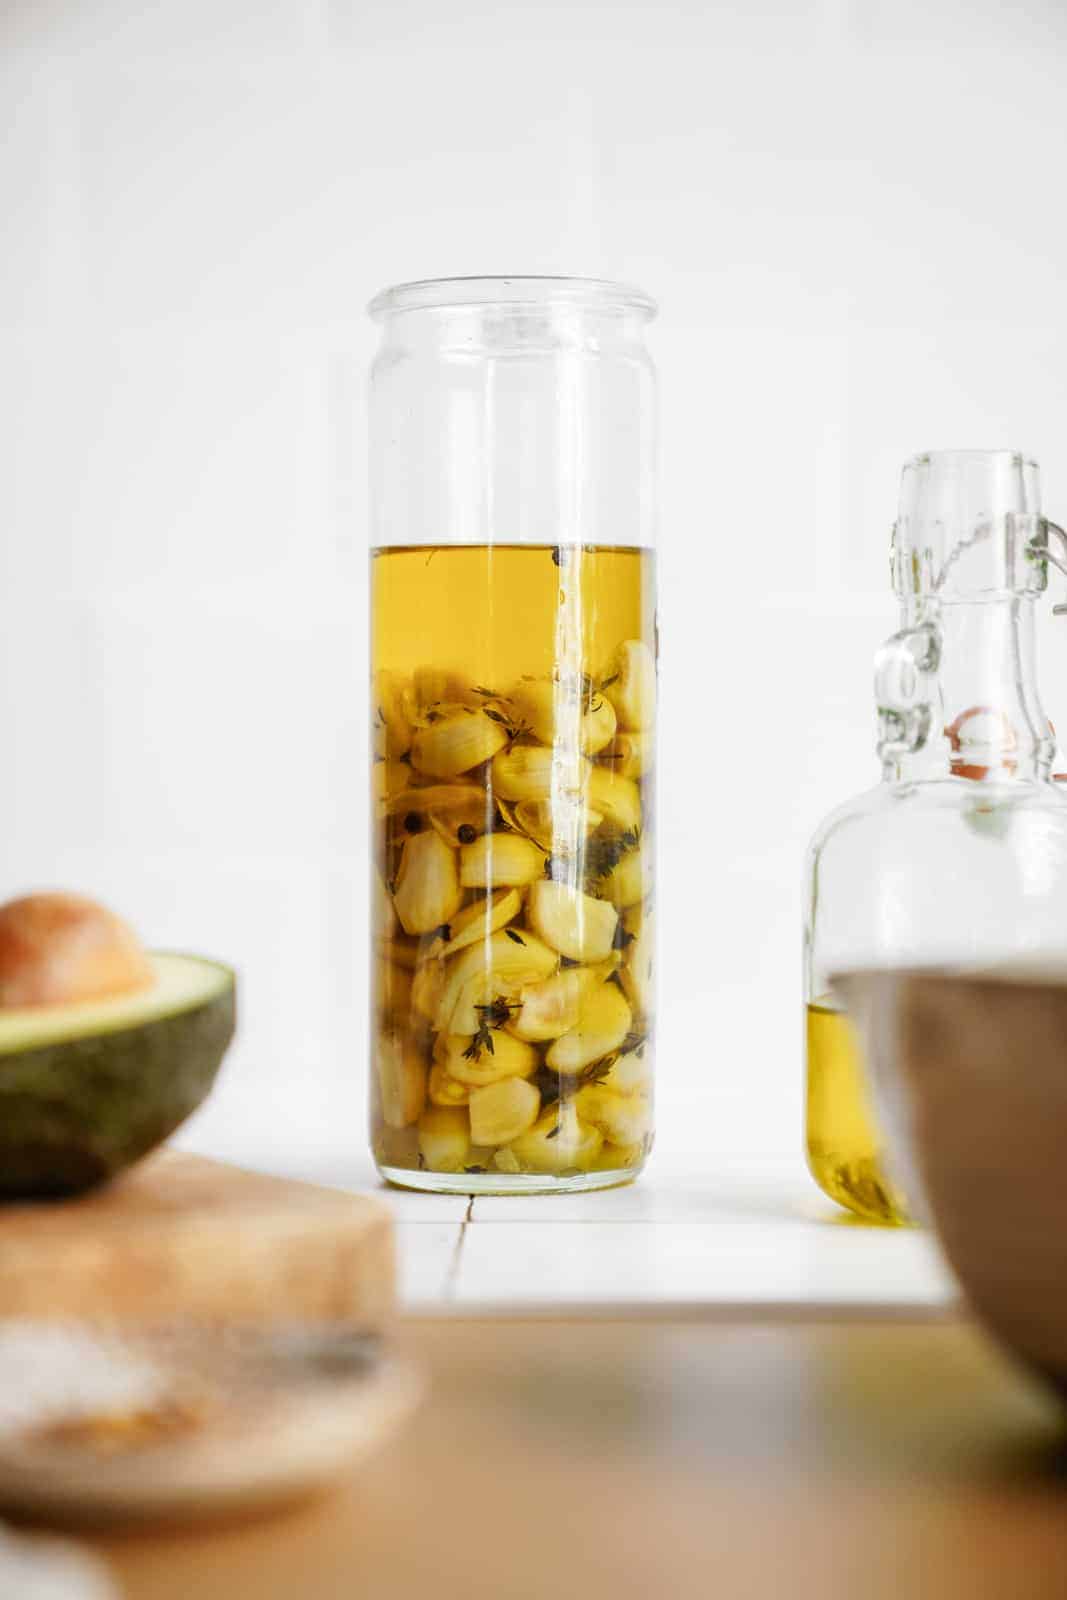 Jar of garlic confit next to jar of infused olive oil.